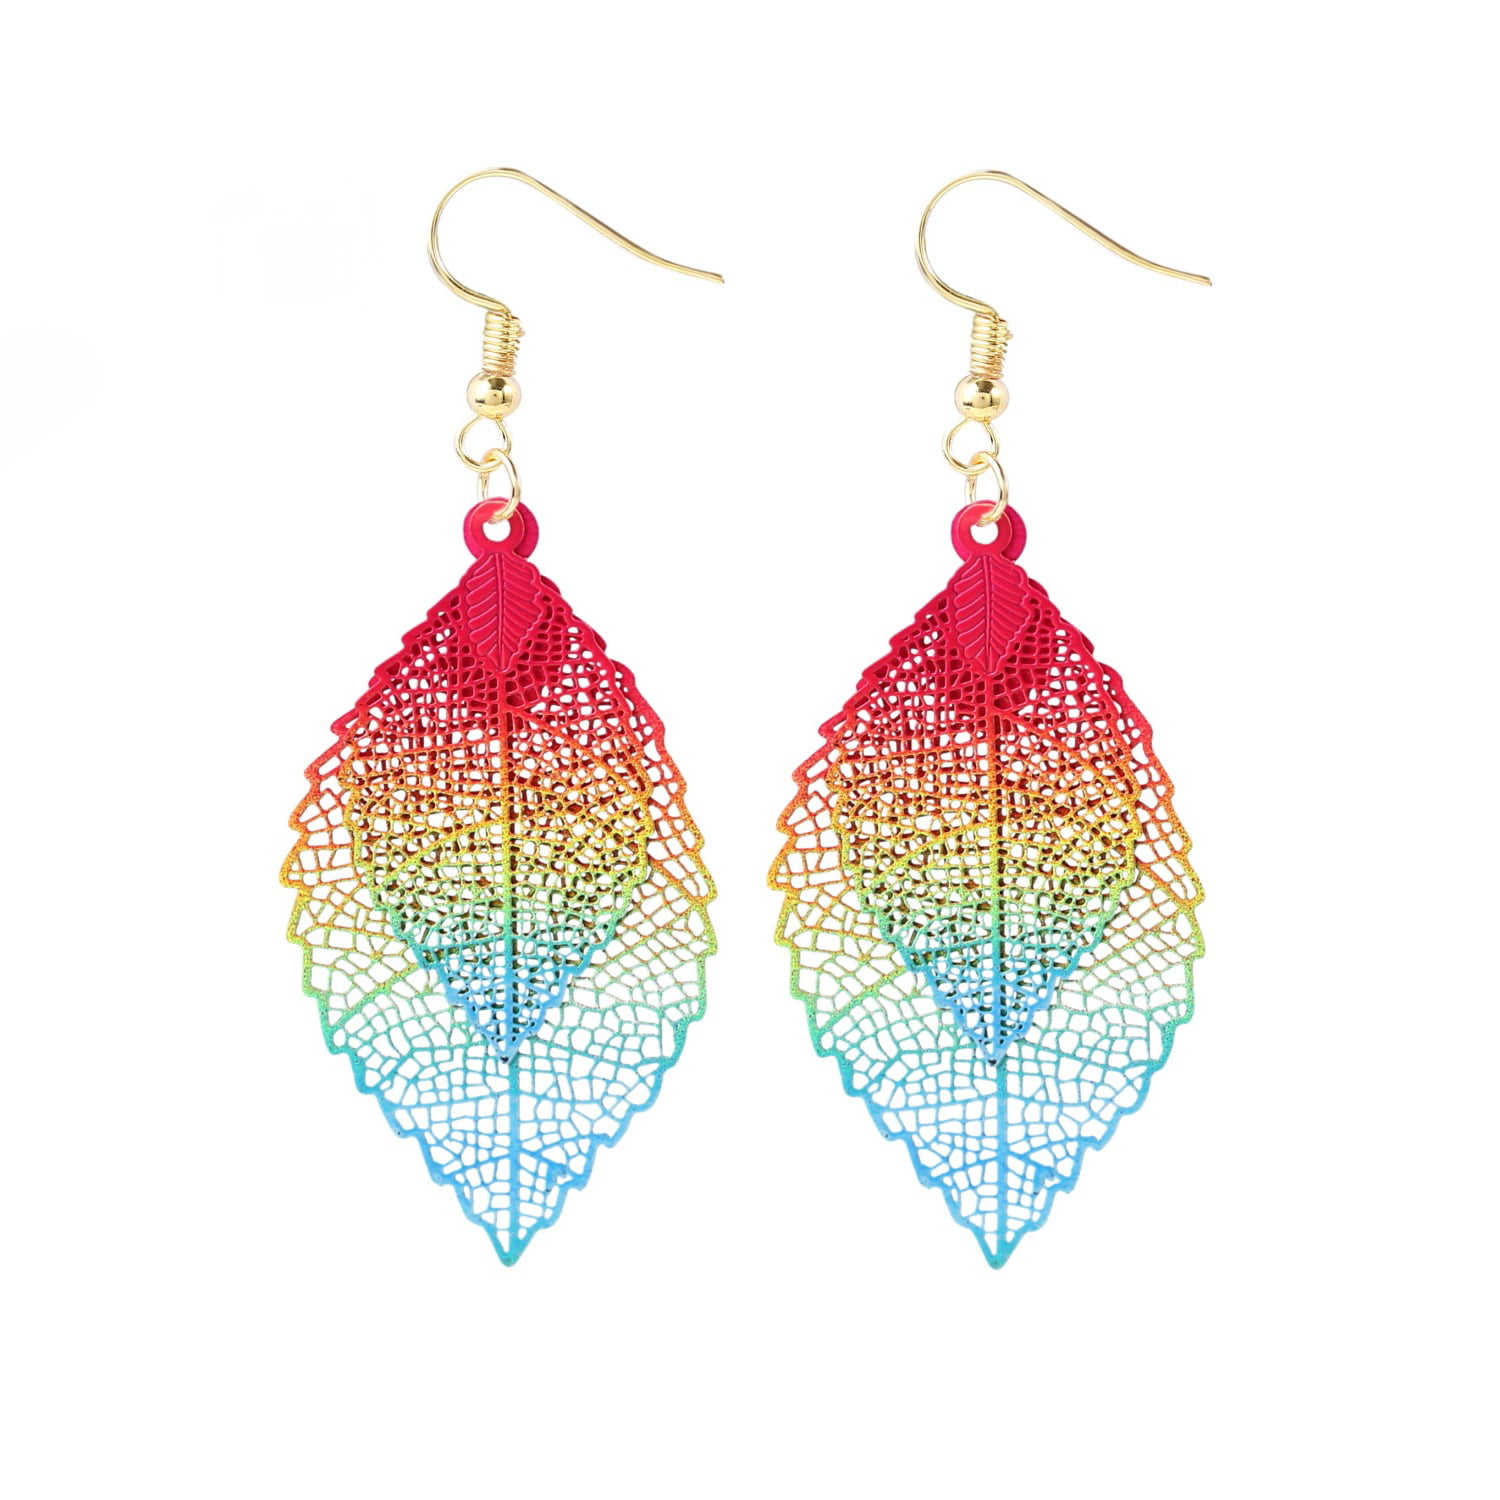 Fashion Metal Hollow Colorful Leaf Pendant Drop Hook Earrings Statement Jewelry